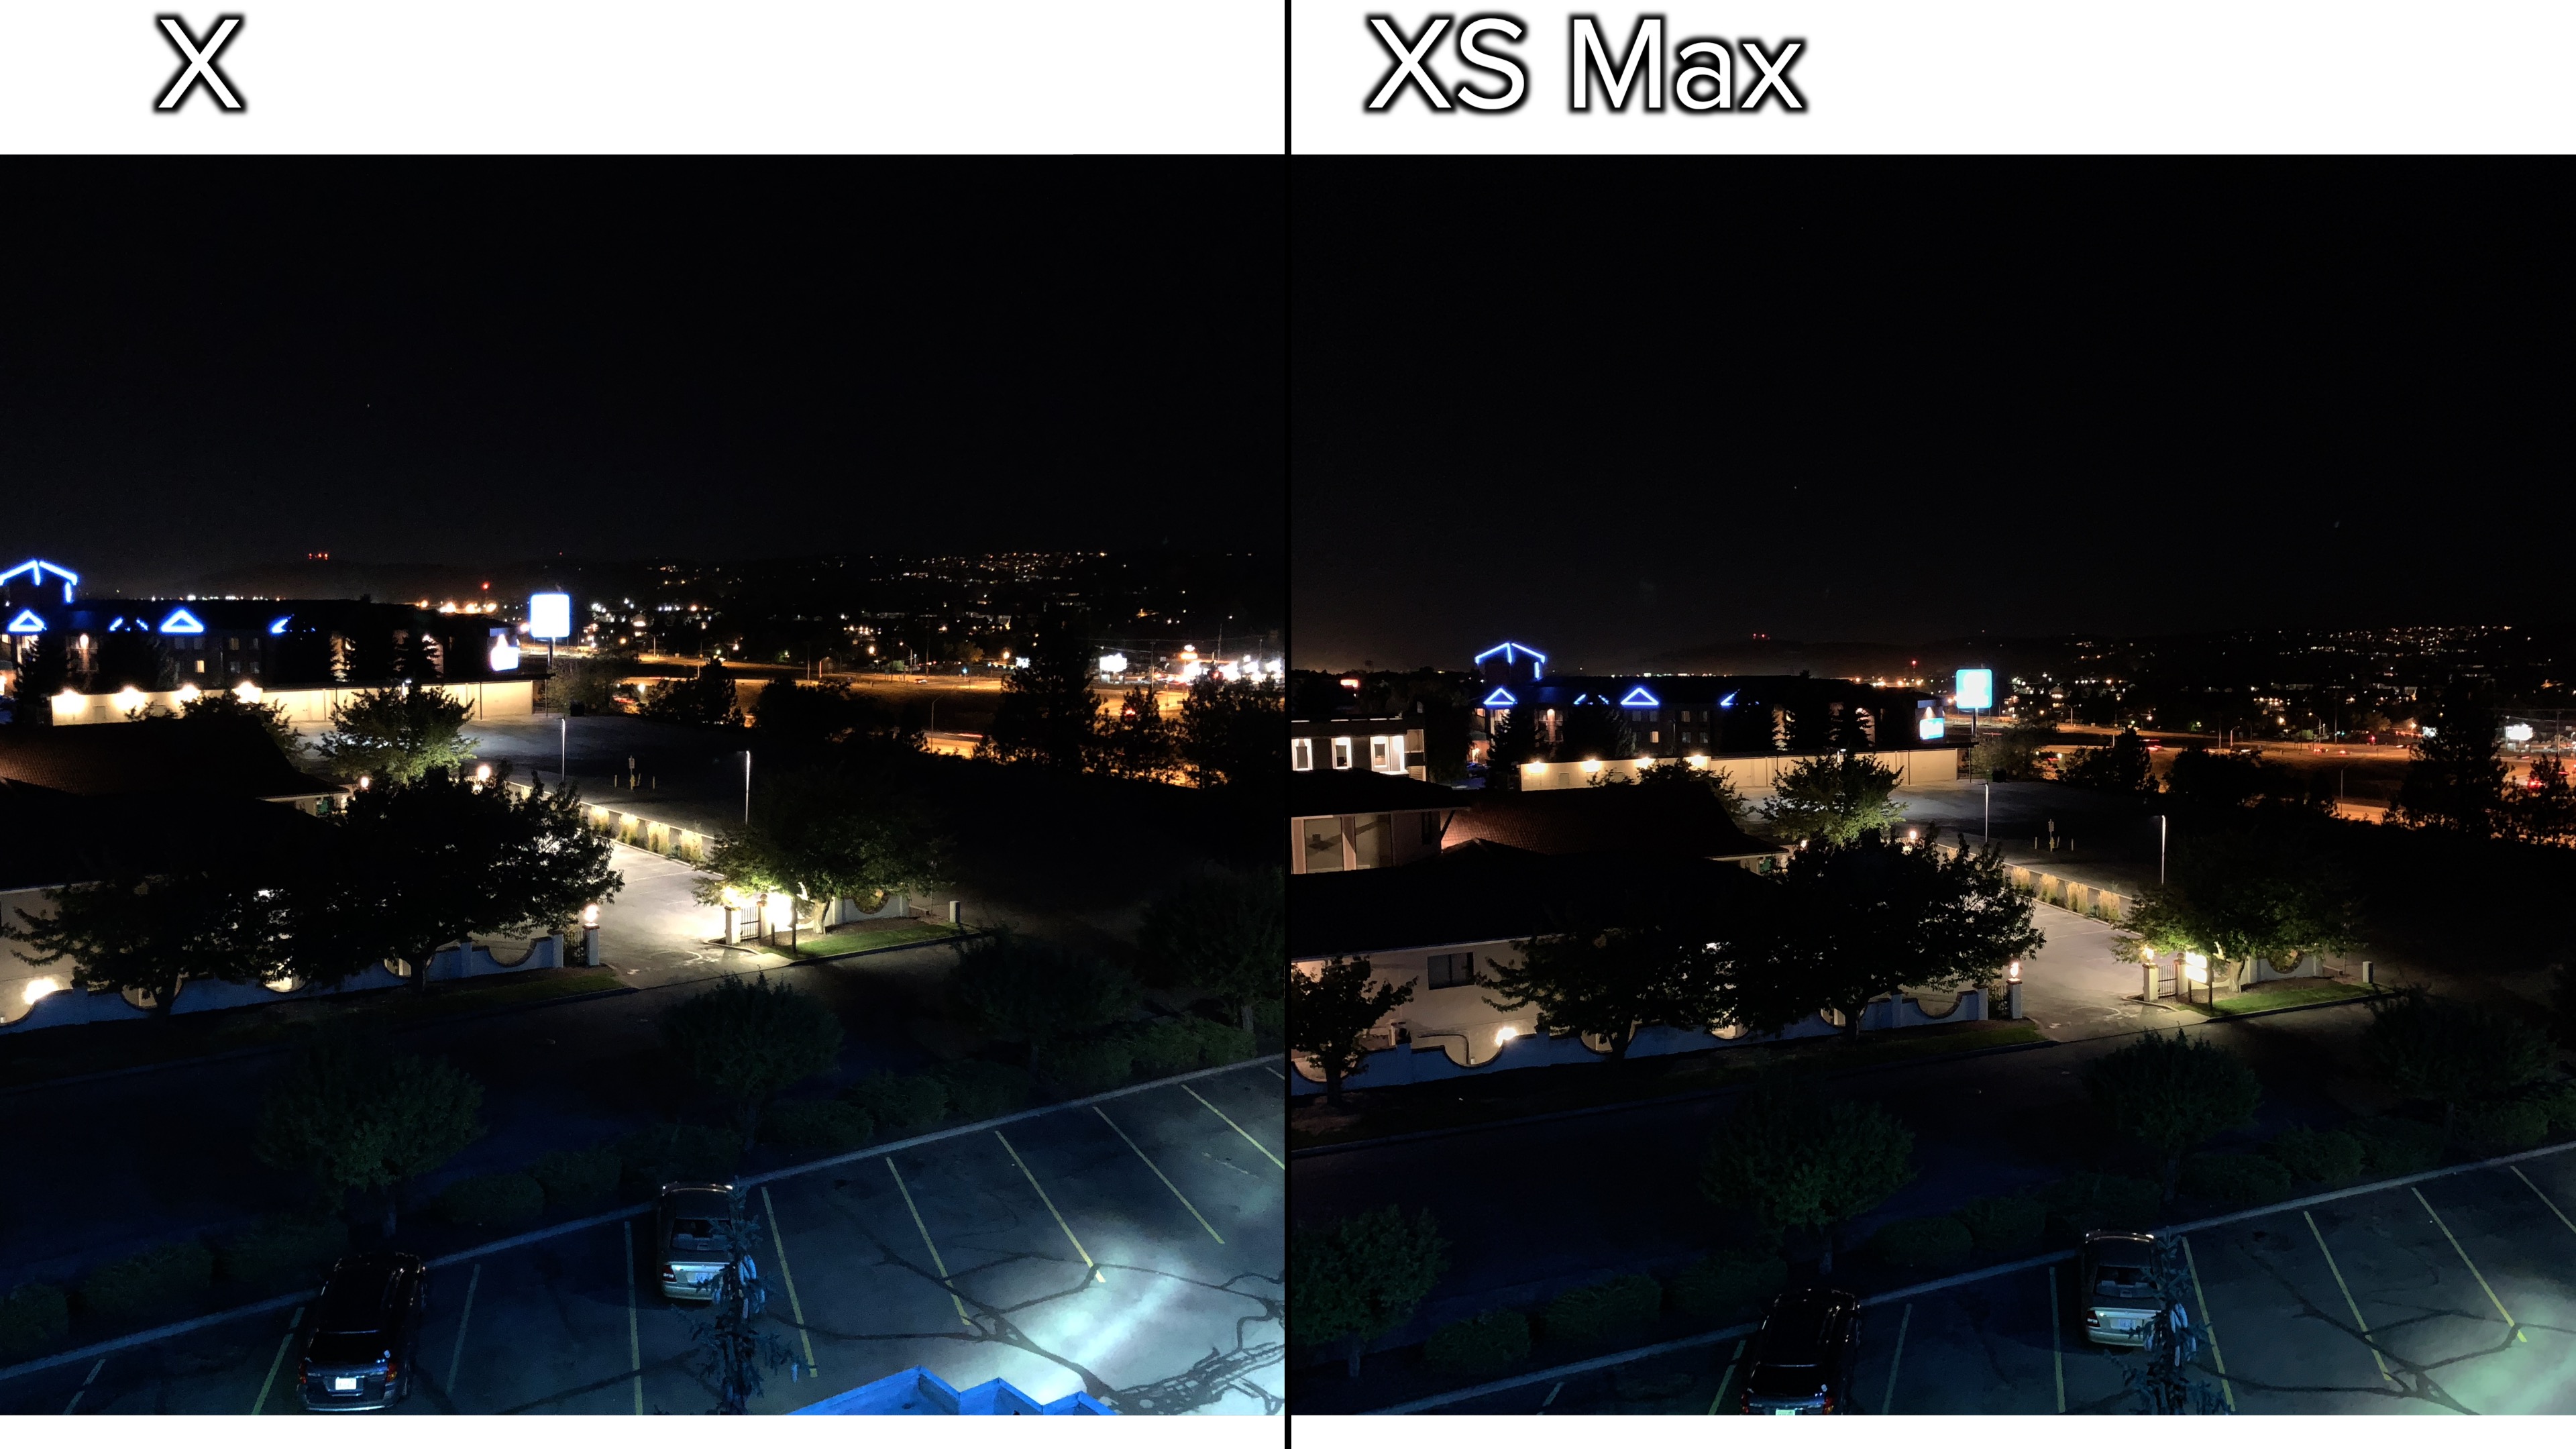 Gods Vanding skraber Photo shootout — Comparing the iPhone XS Max versus the iPhone X |  AppleInsider